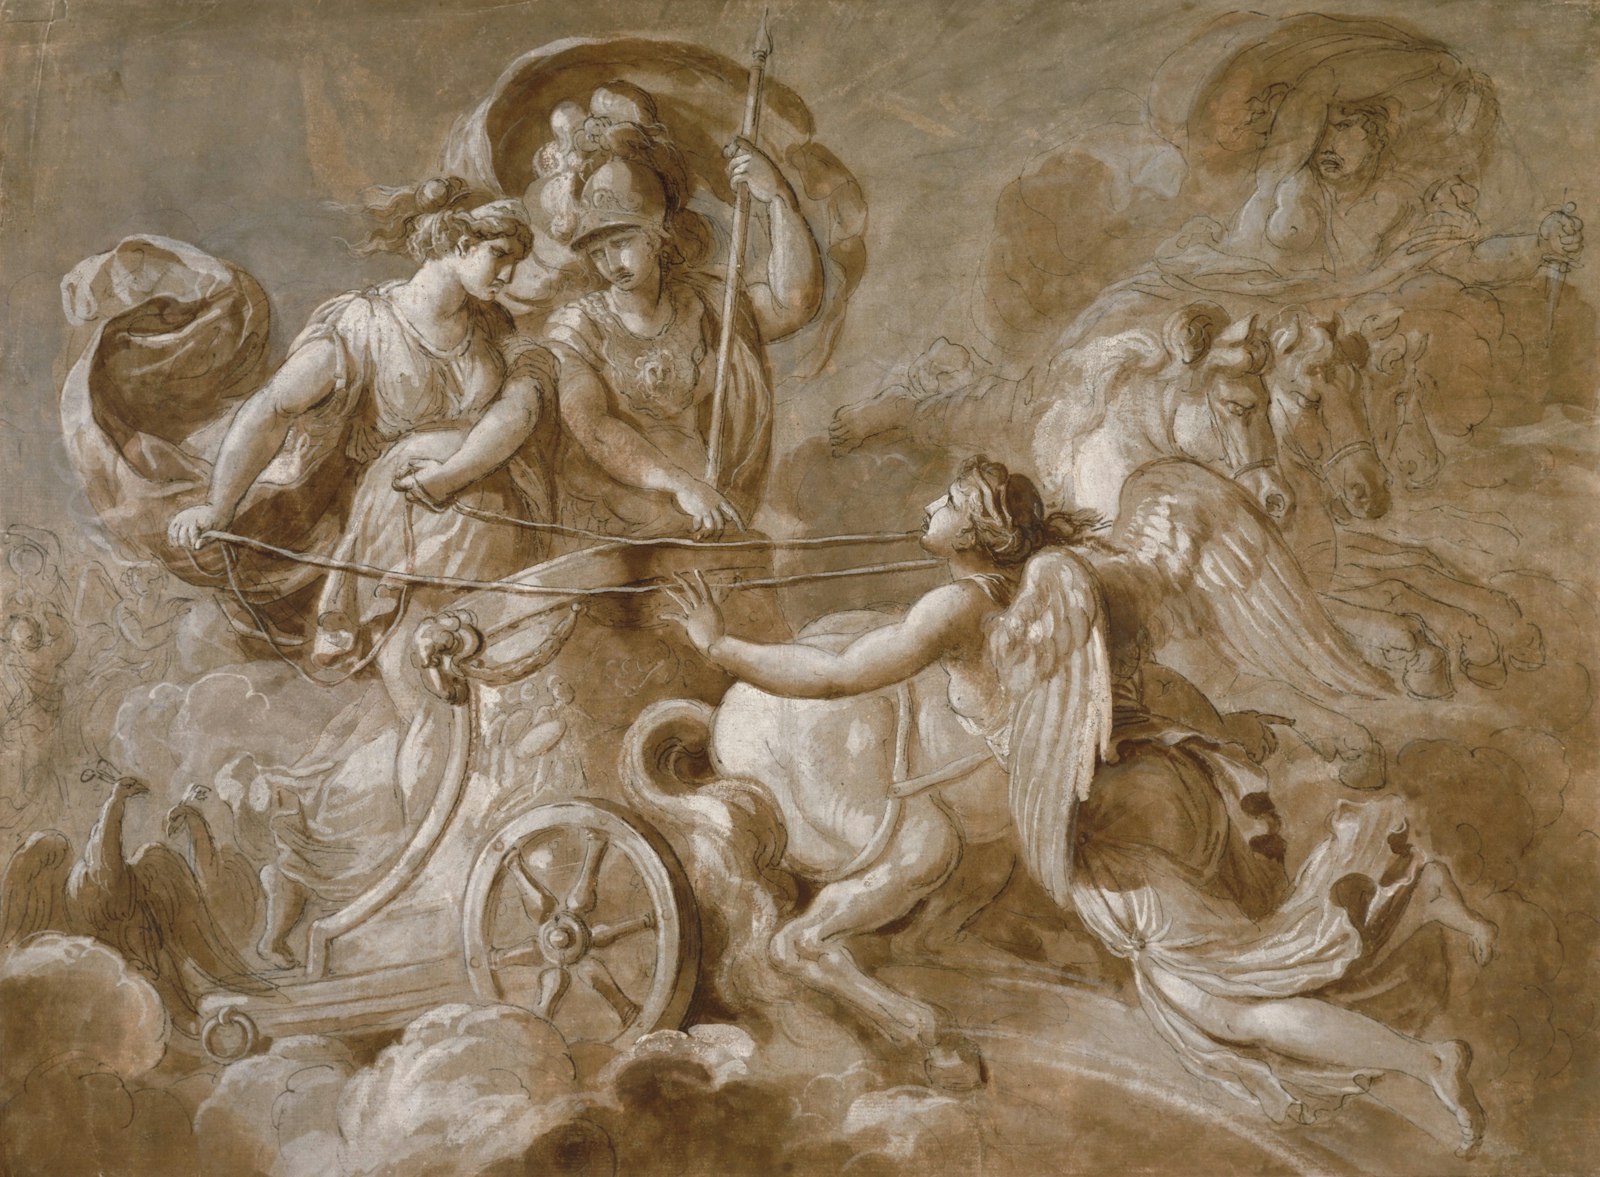 Iris Approaching Athena and Hera by Louis-Jean-François Lagrenée ca. 1780